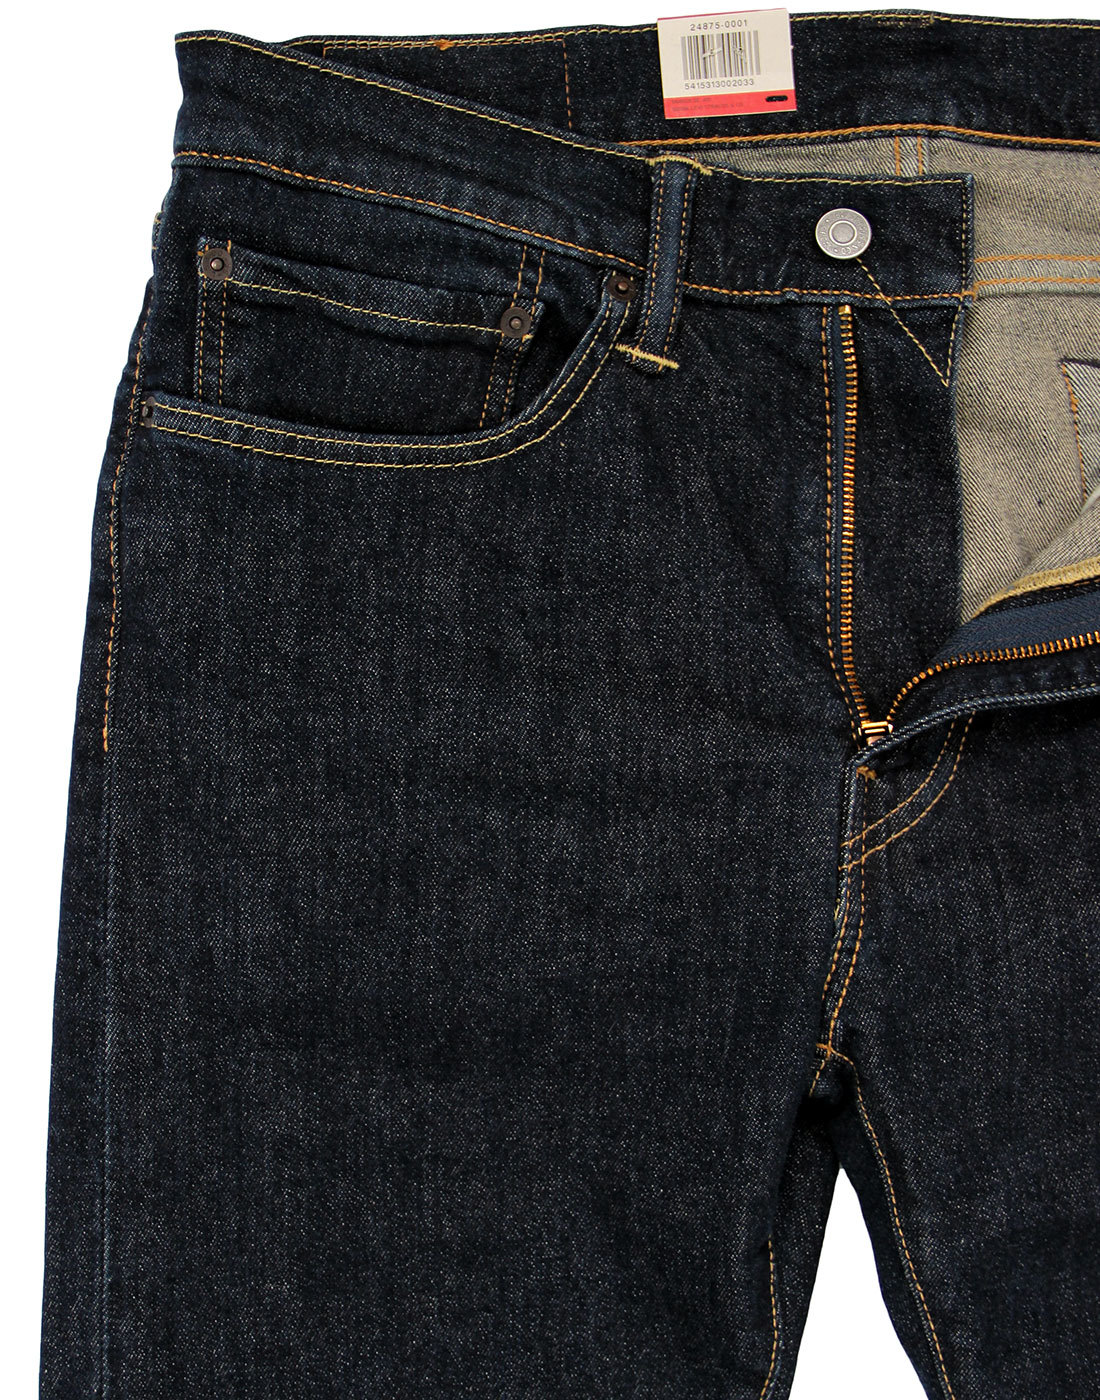 LEVI'S® 519 Retro Indie Mod Extreme Skinny Denim Jeans in Pipe